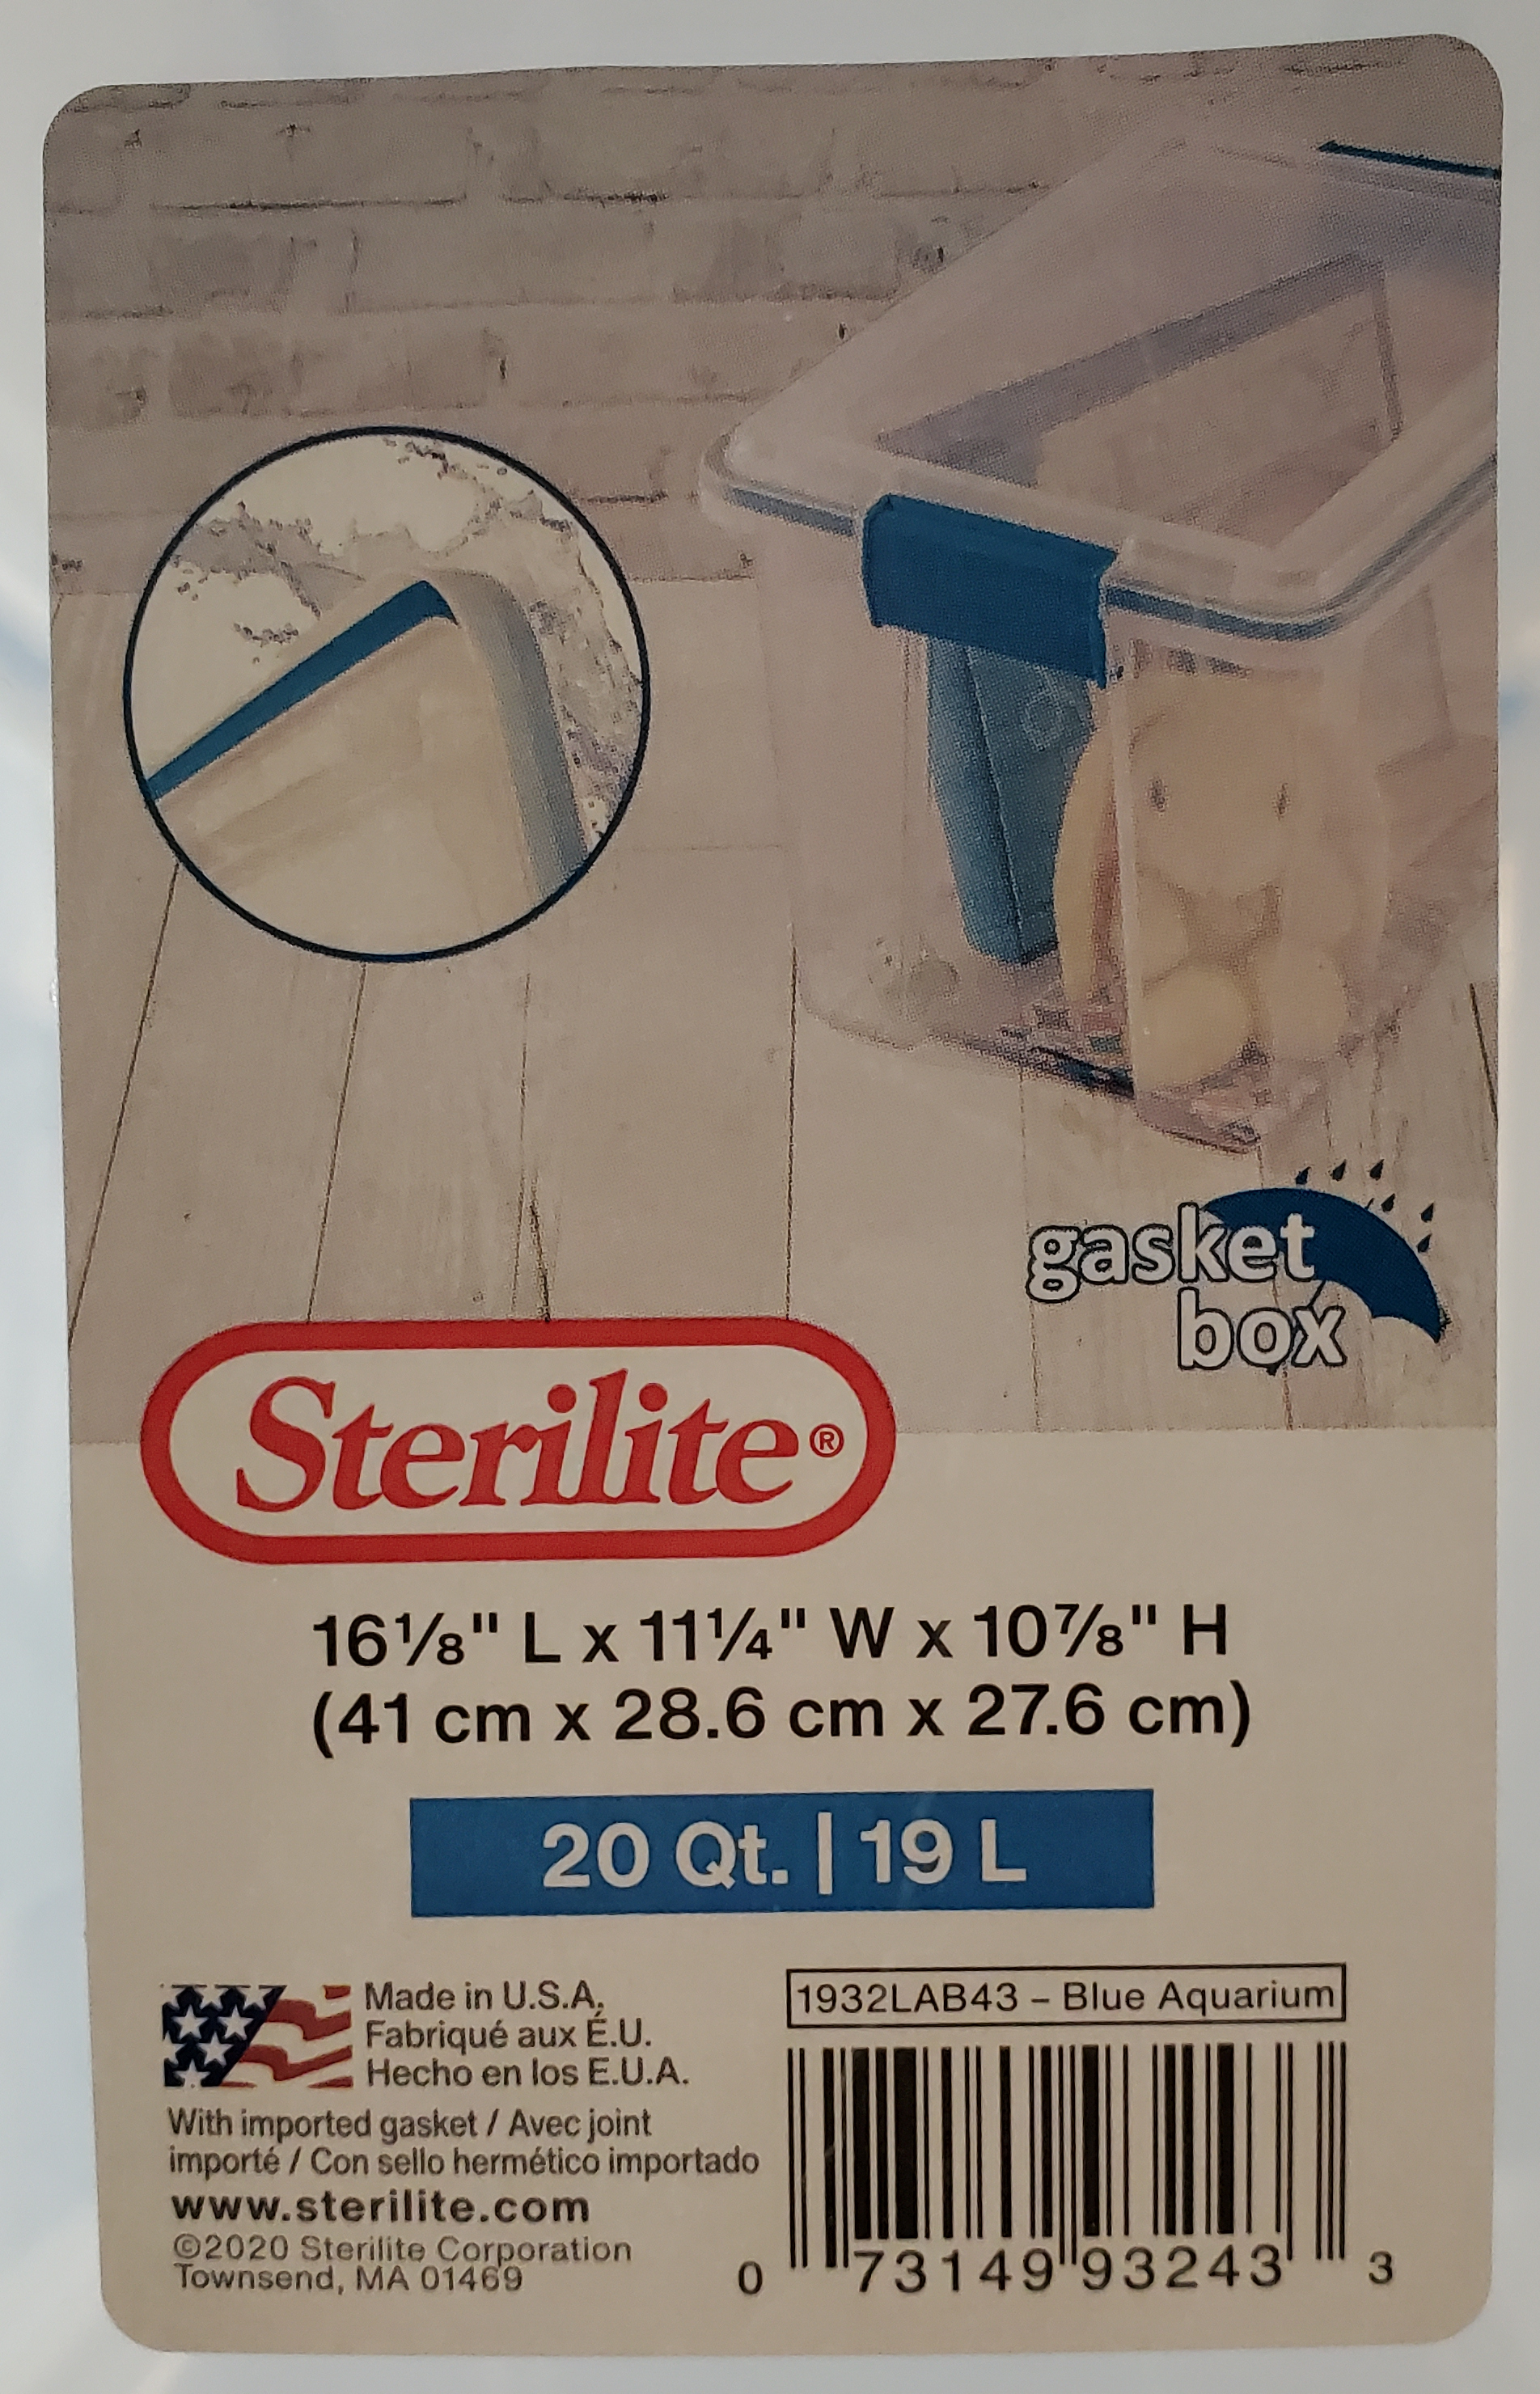 Reviews for Sterilite 20 Qt. Gasket Box